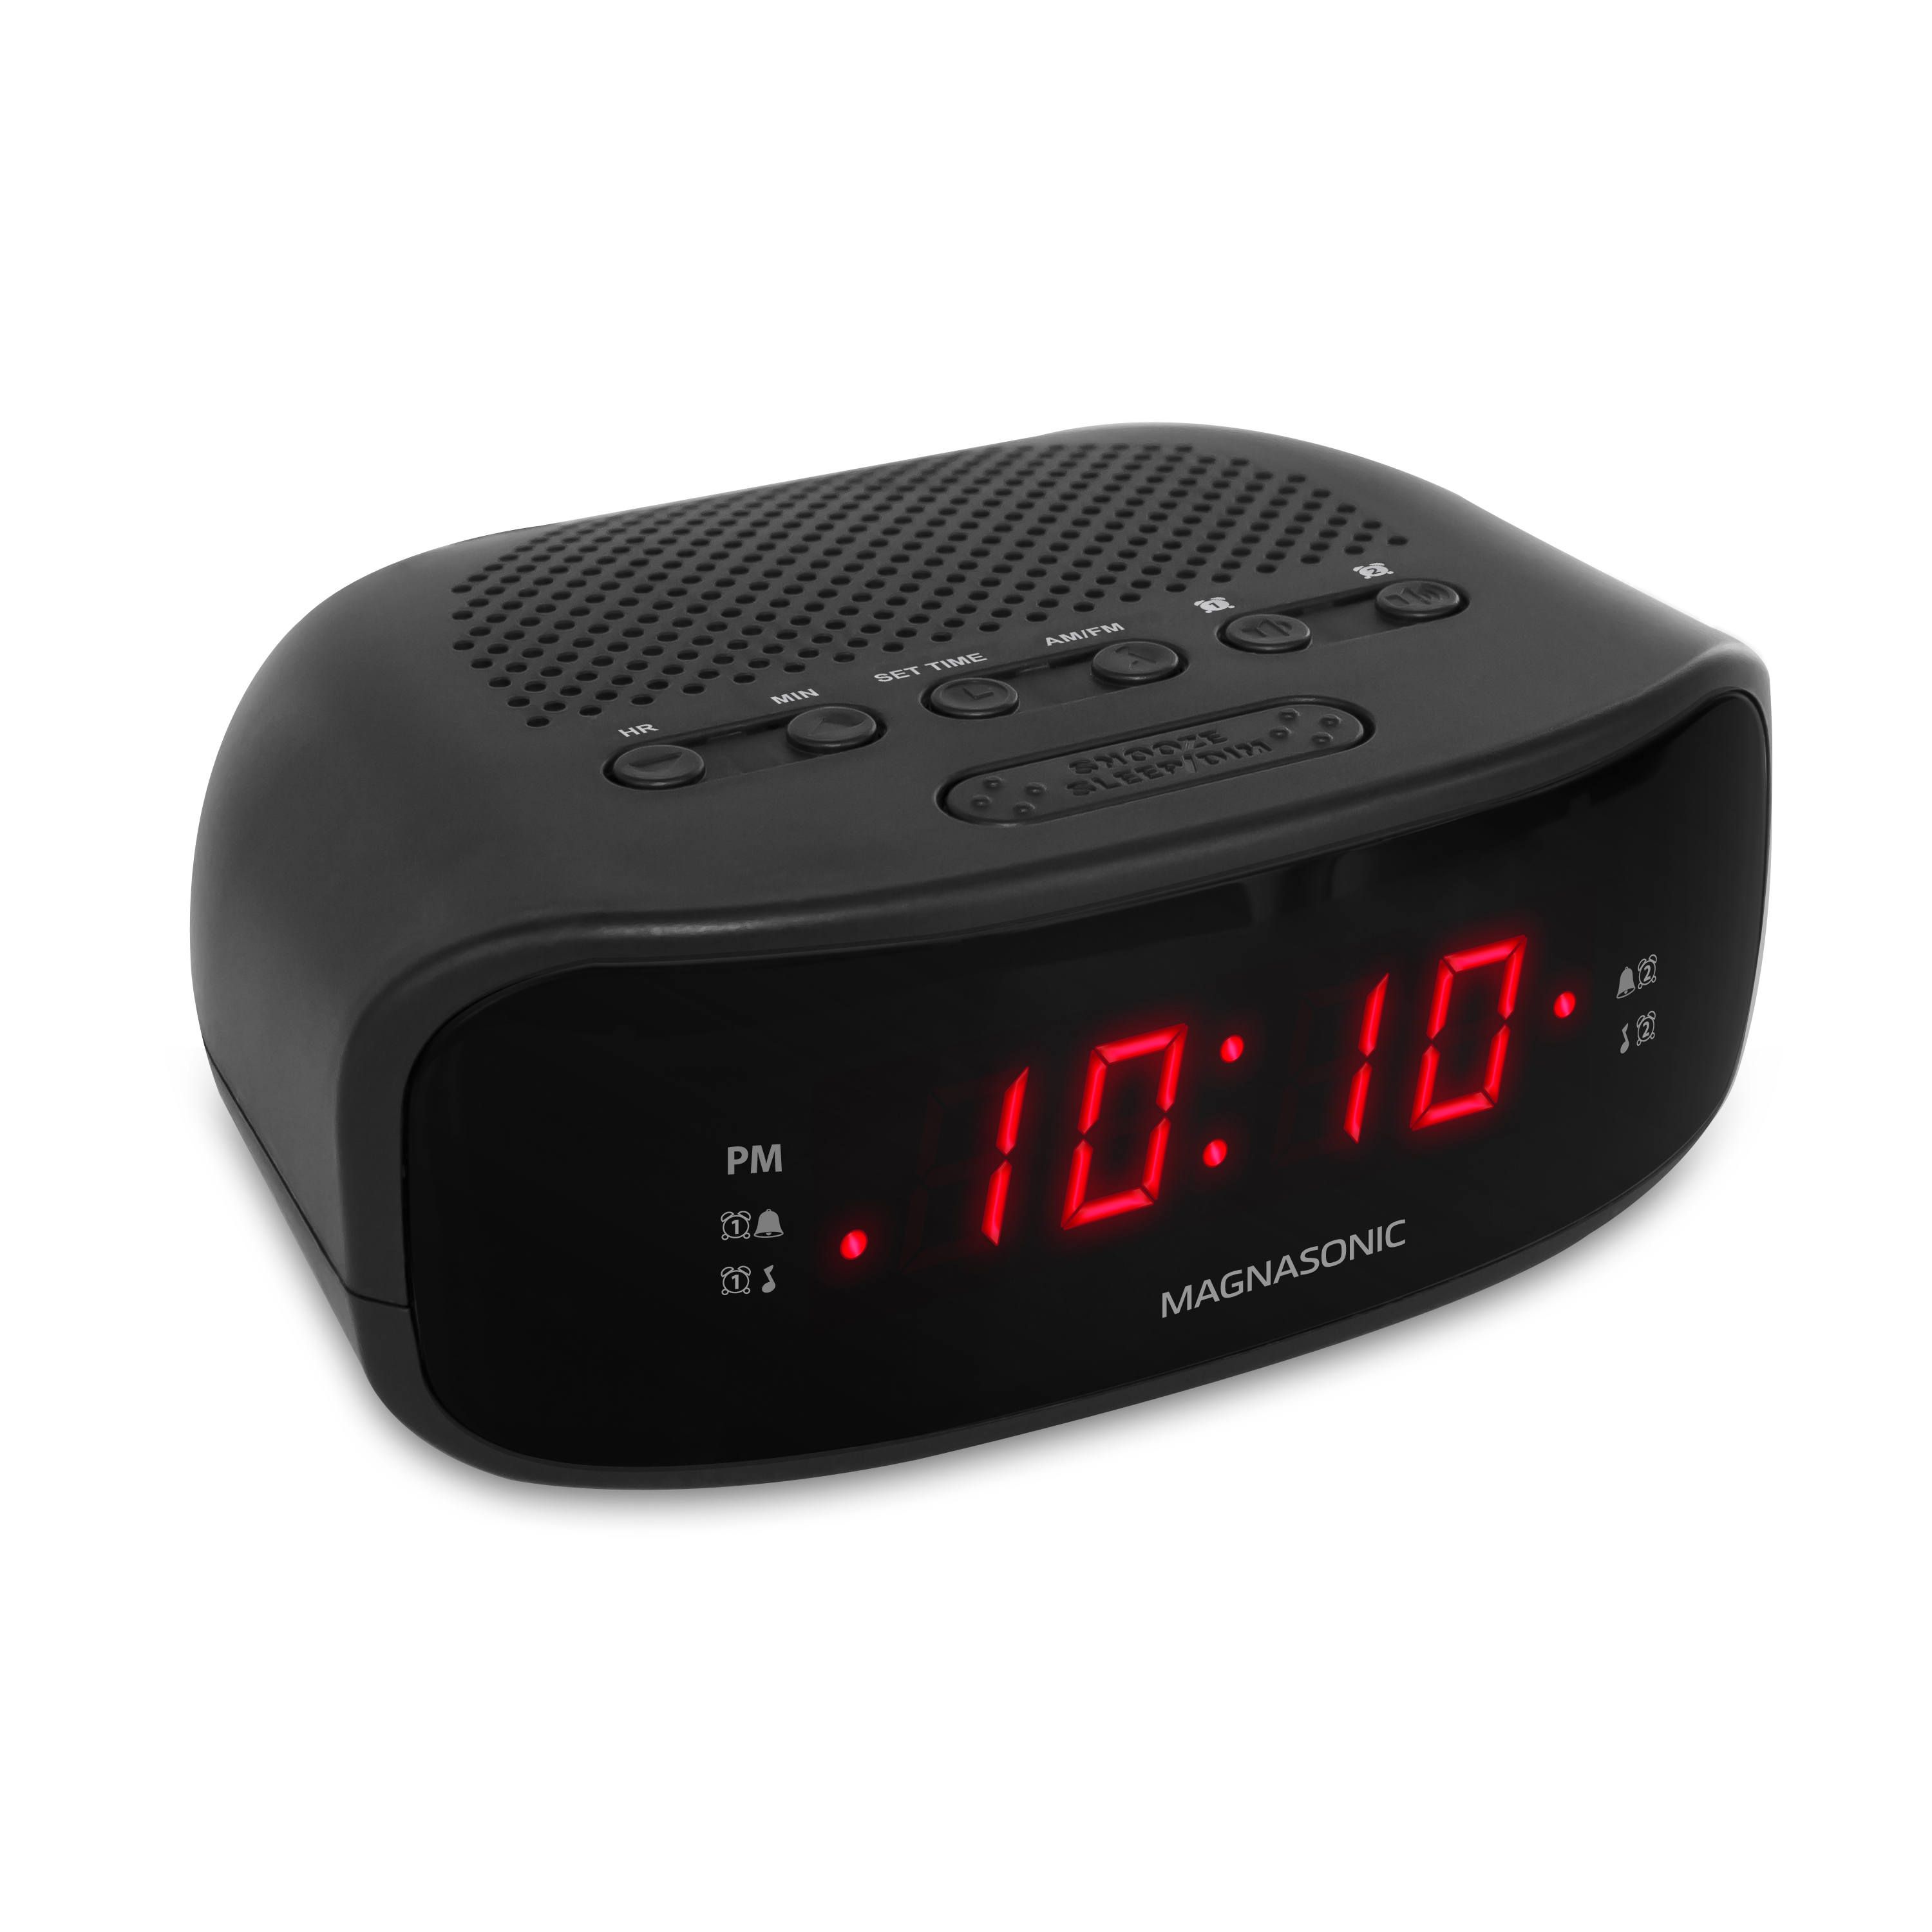 Magnasonic Digital AM/FM Clock Radio with Battery Backup, Dual Alarm, Sleep/Snooze Functions, Display Dimming  Option